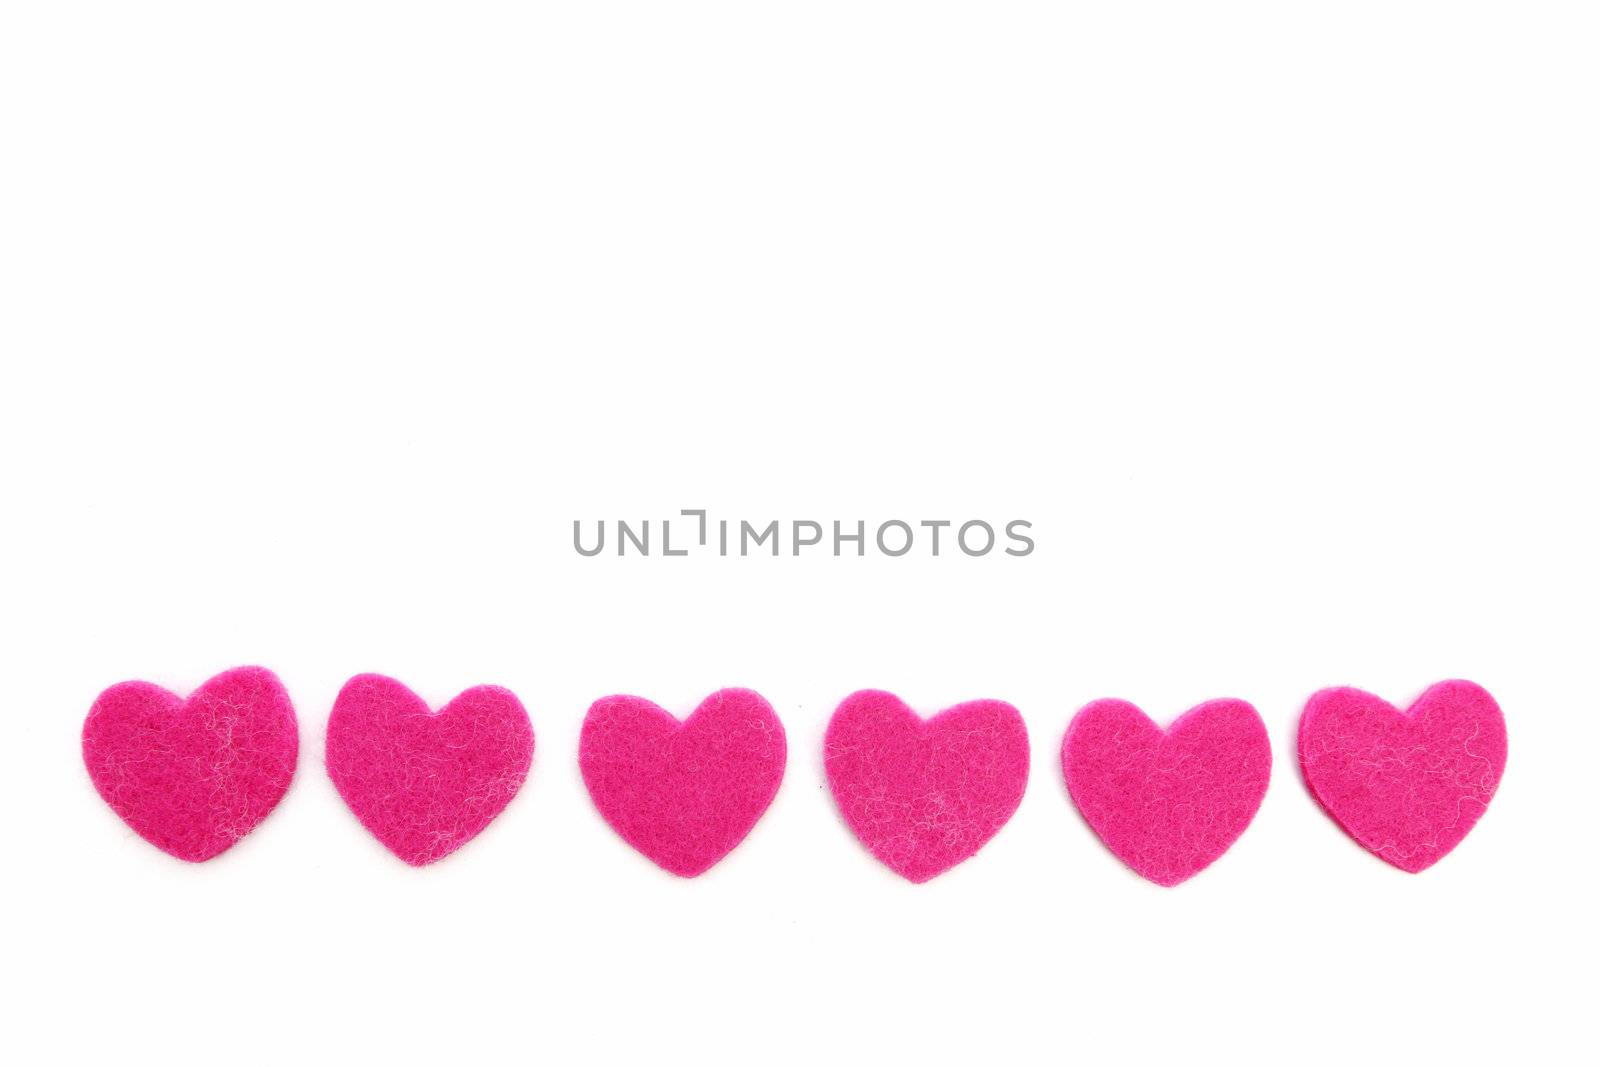 Row of romantic pink hearts by Farina6000